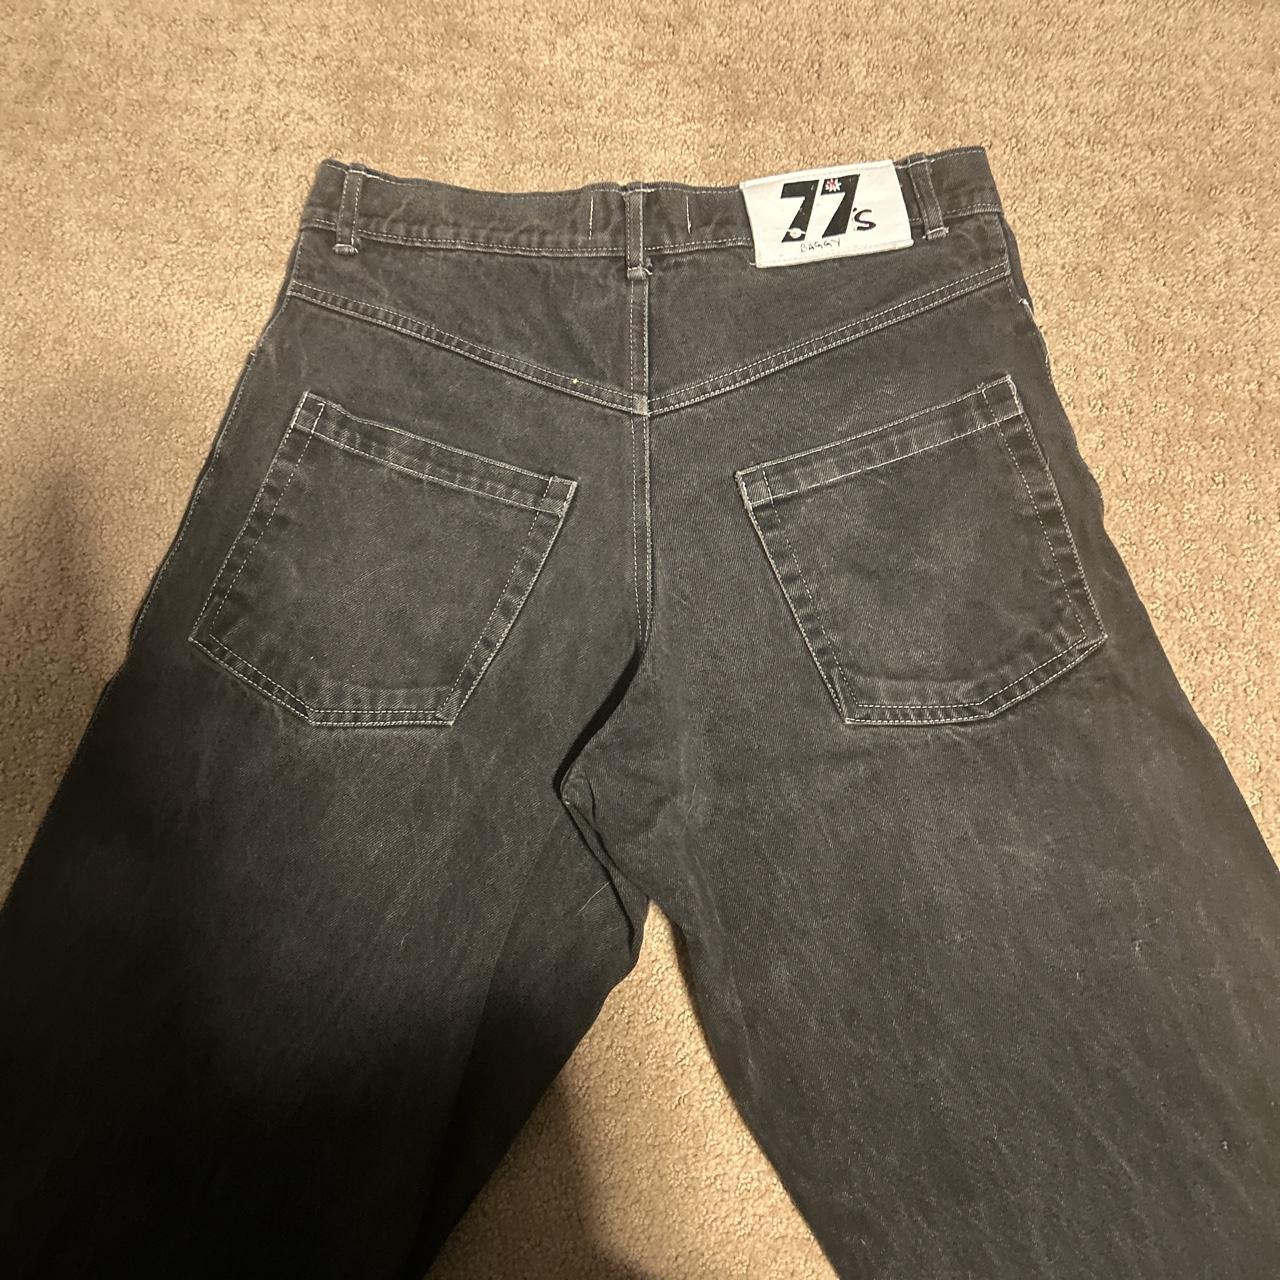 black/white contrast-stitch 77denim jeans These are... - Depop